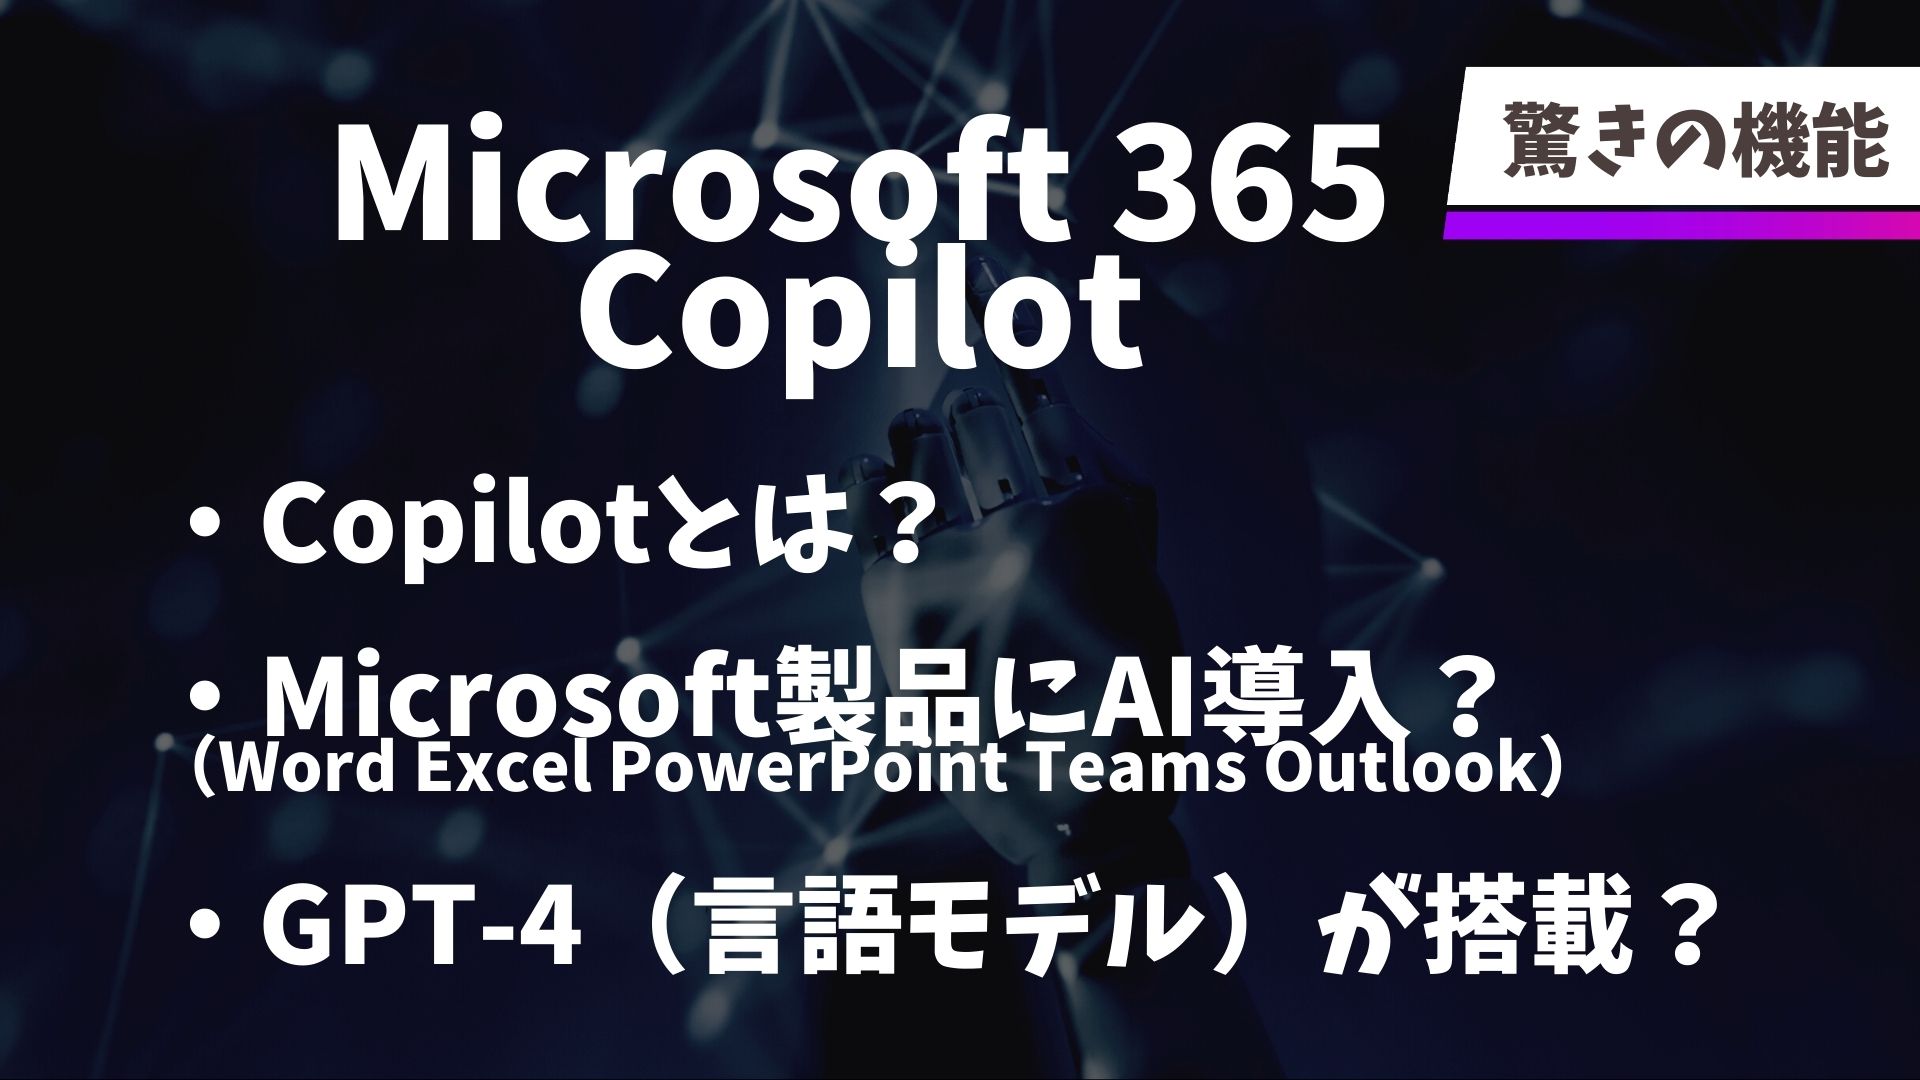 Microsoft 365 CopilotがGPT4に搭載